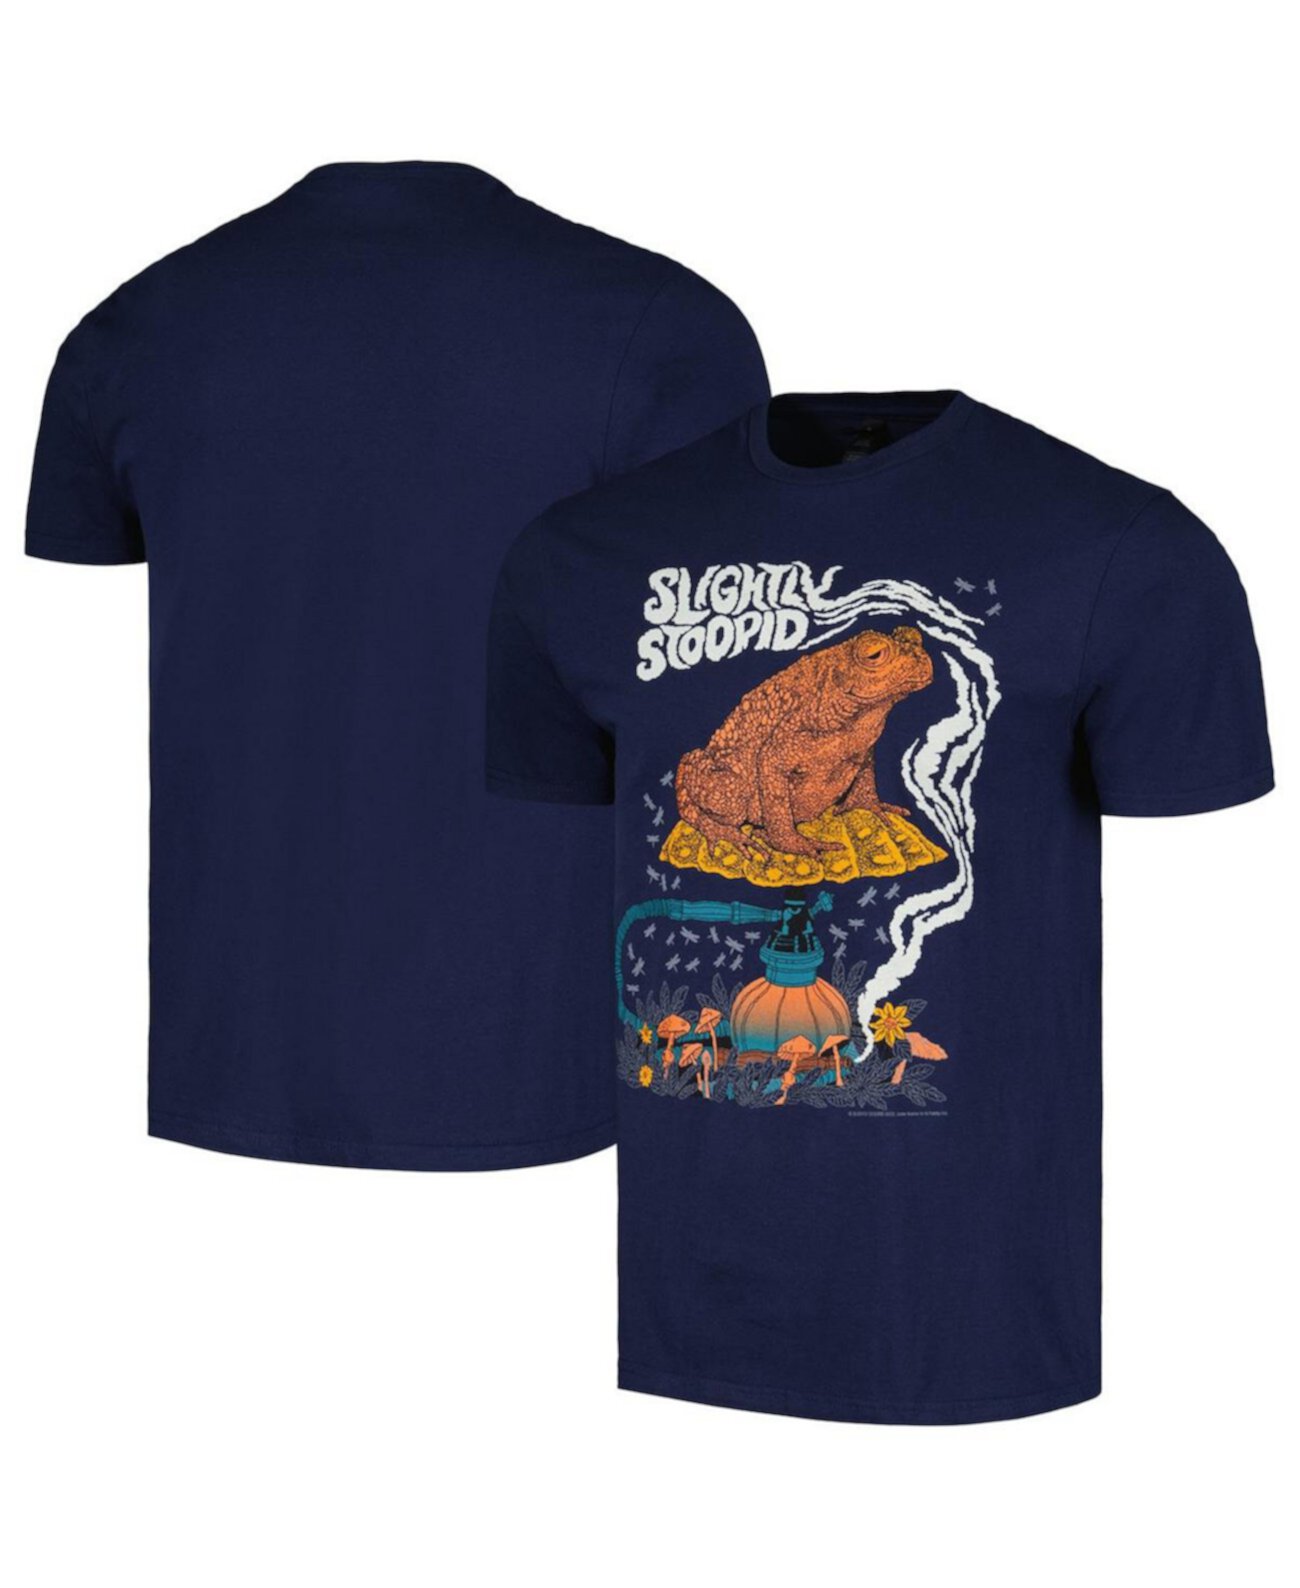 Men's and Women's Navy Slightly Stoopid Smoking Toad T-Shirt HiFi Entertainment